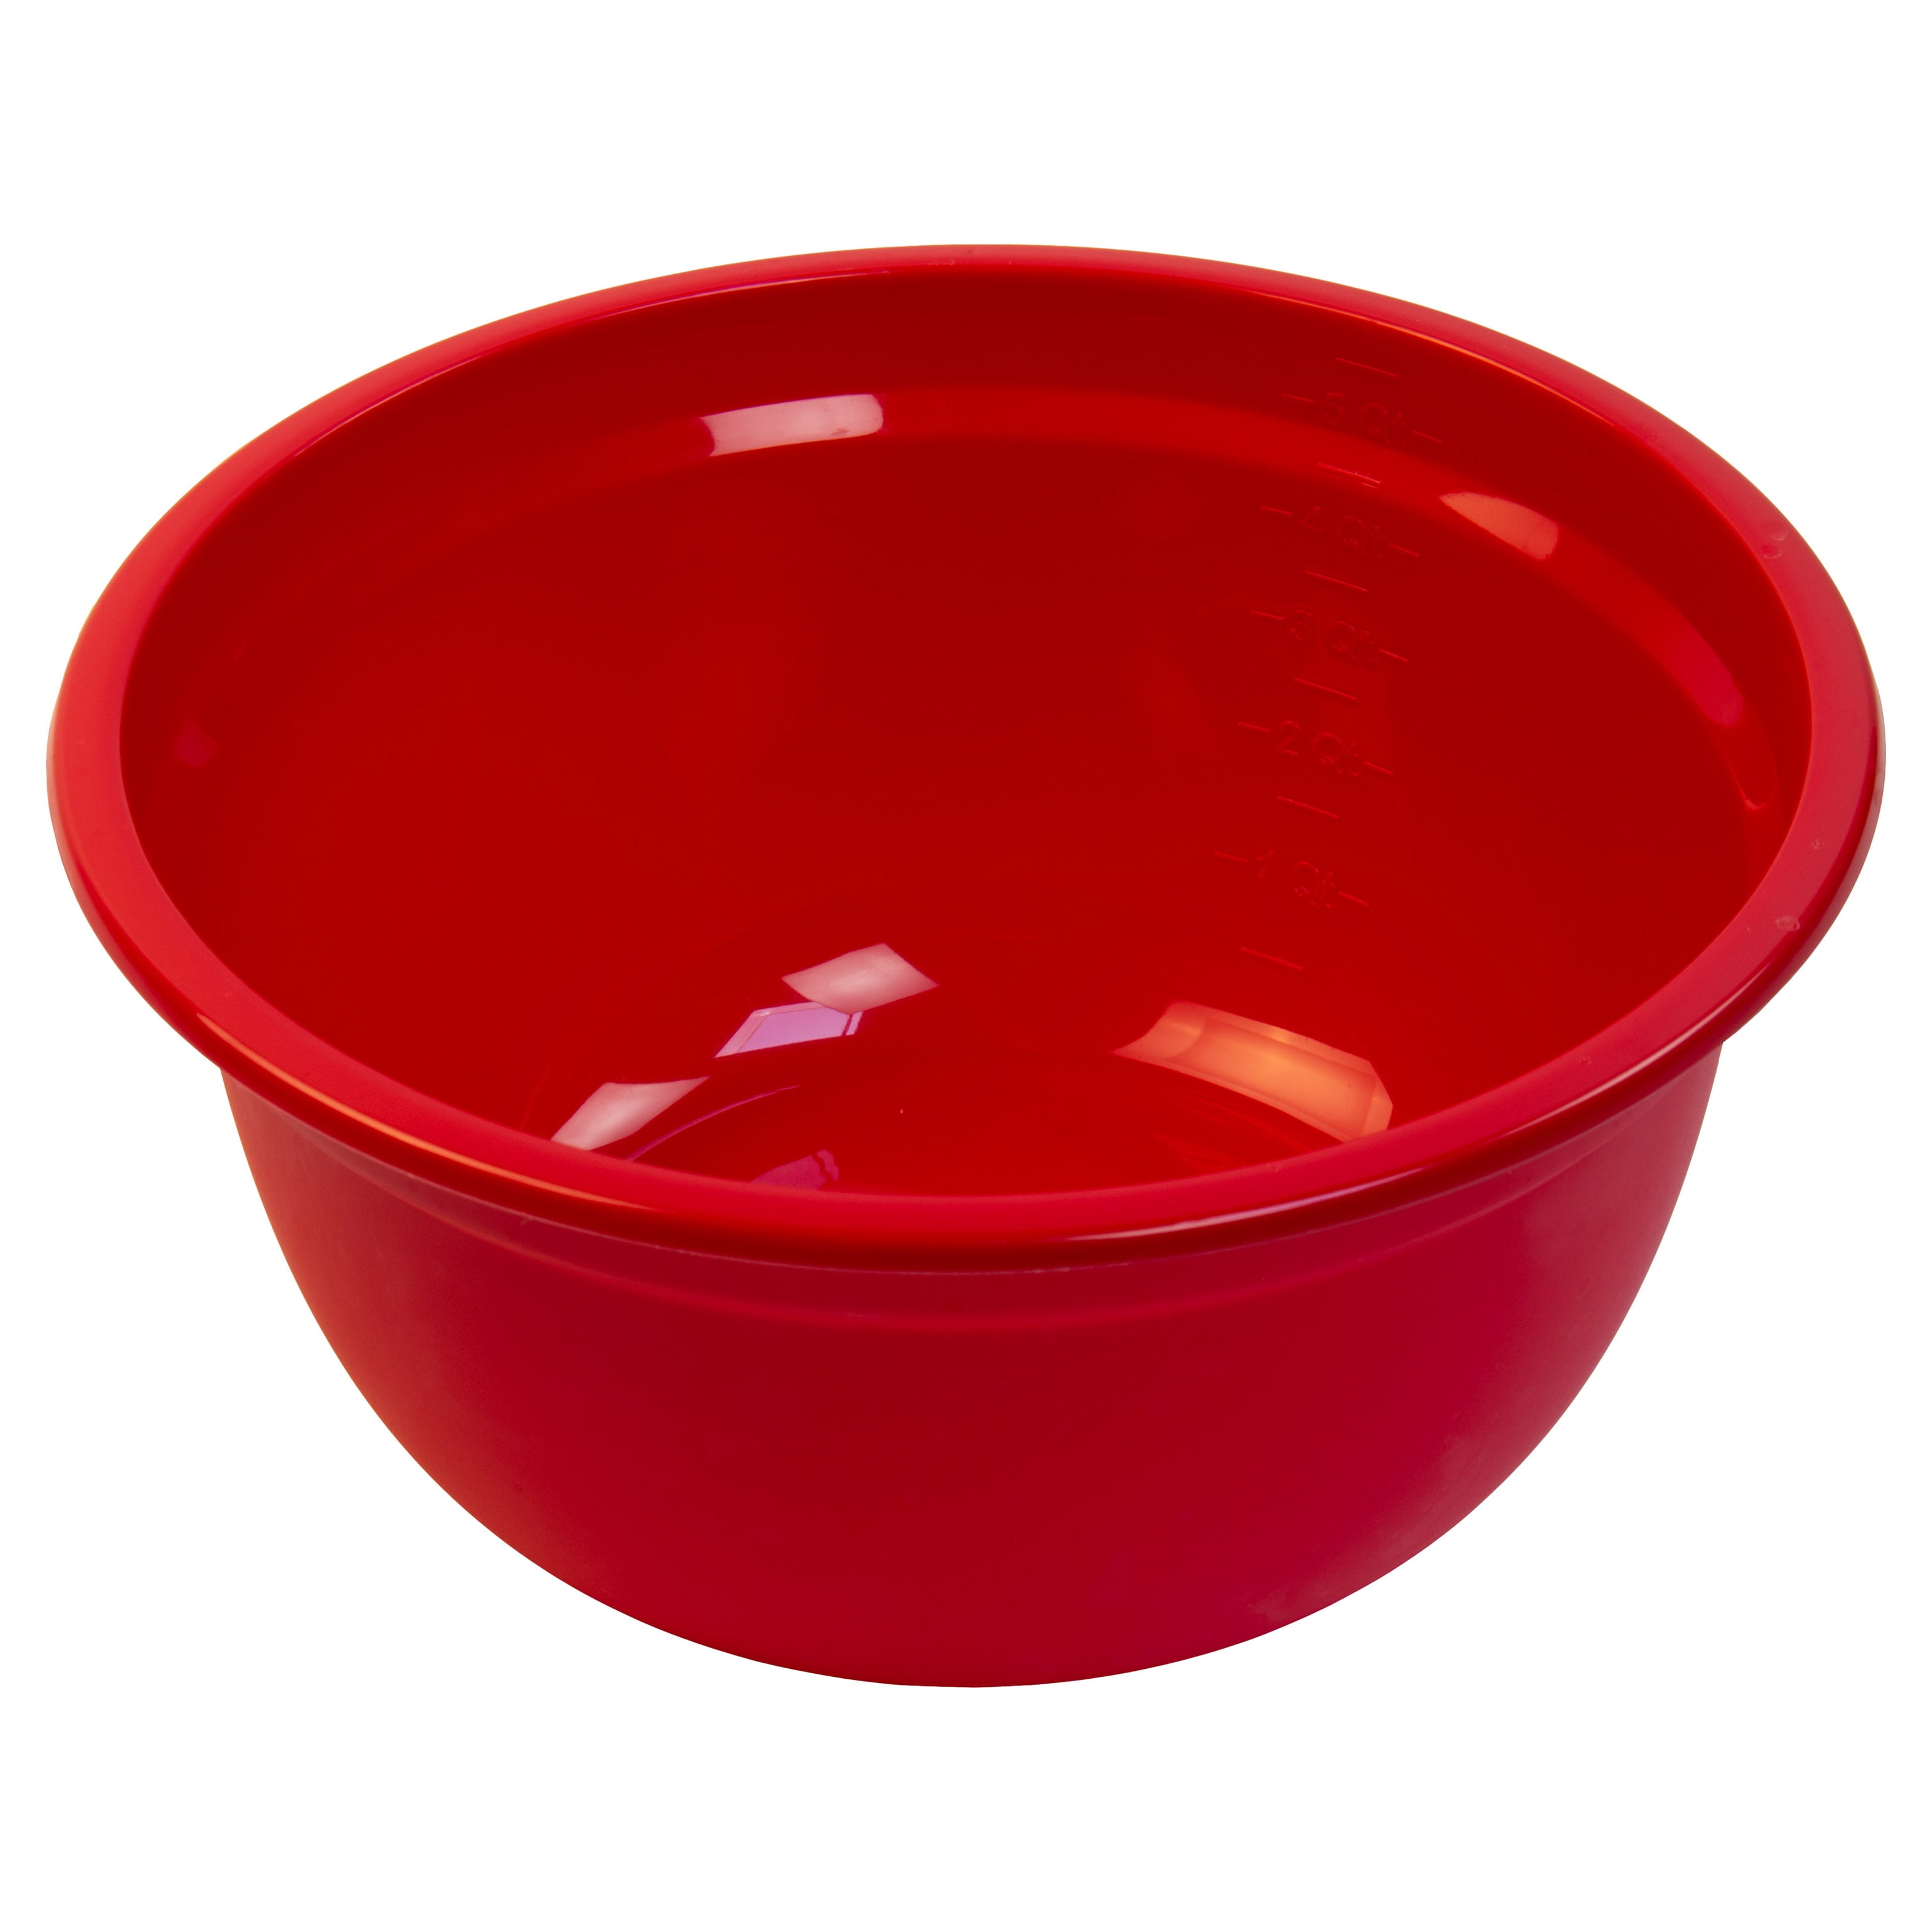 Mainstays 6-Quart Mixing Bowl, Red, Raised Inner Measurements, Polypropylene